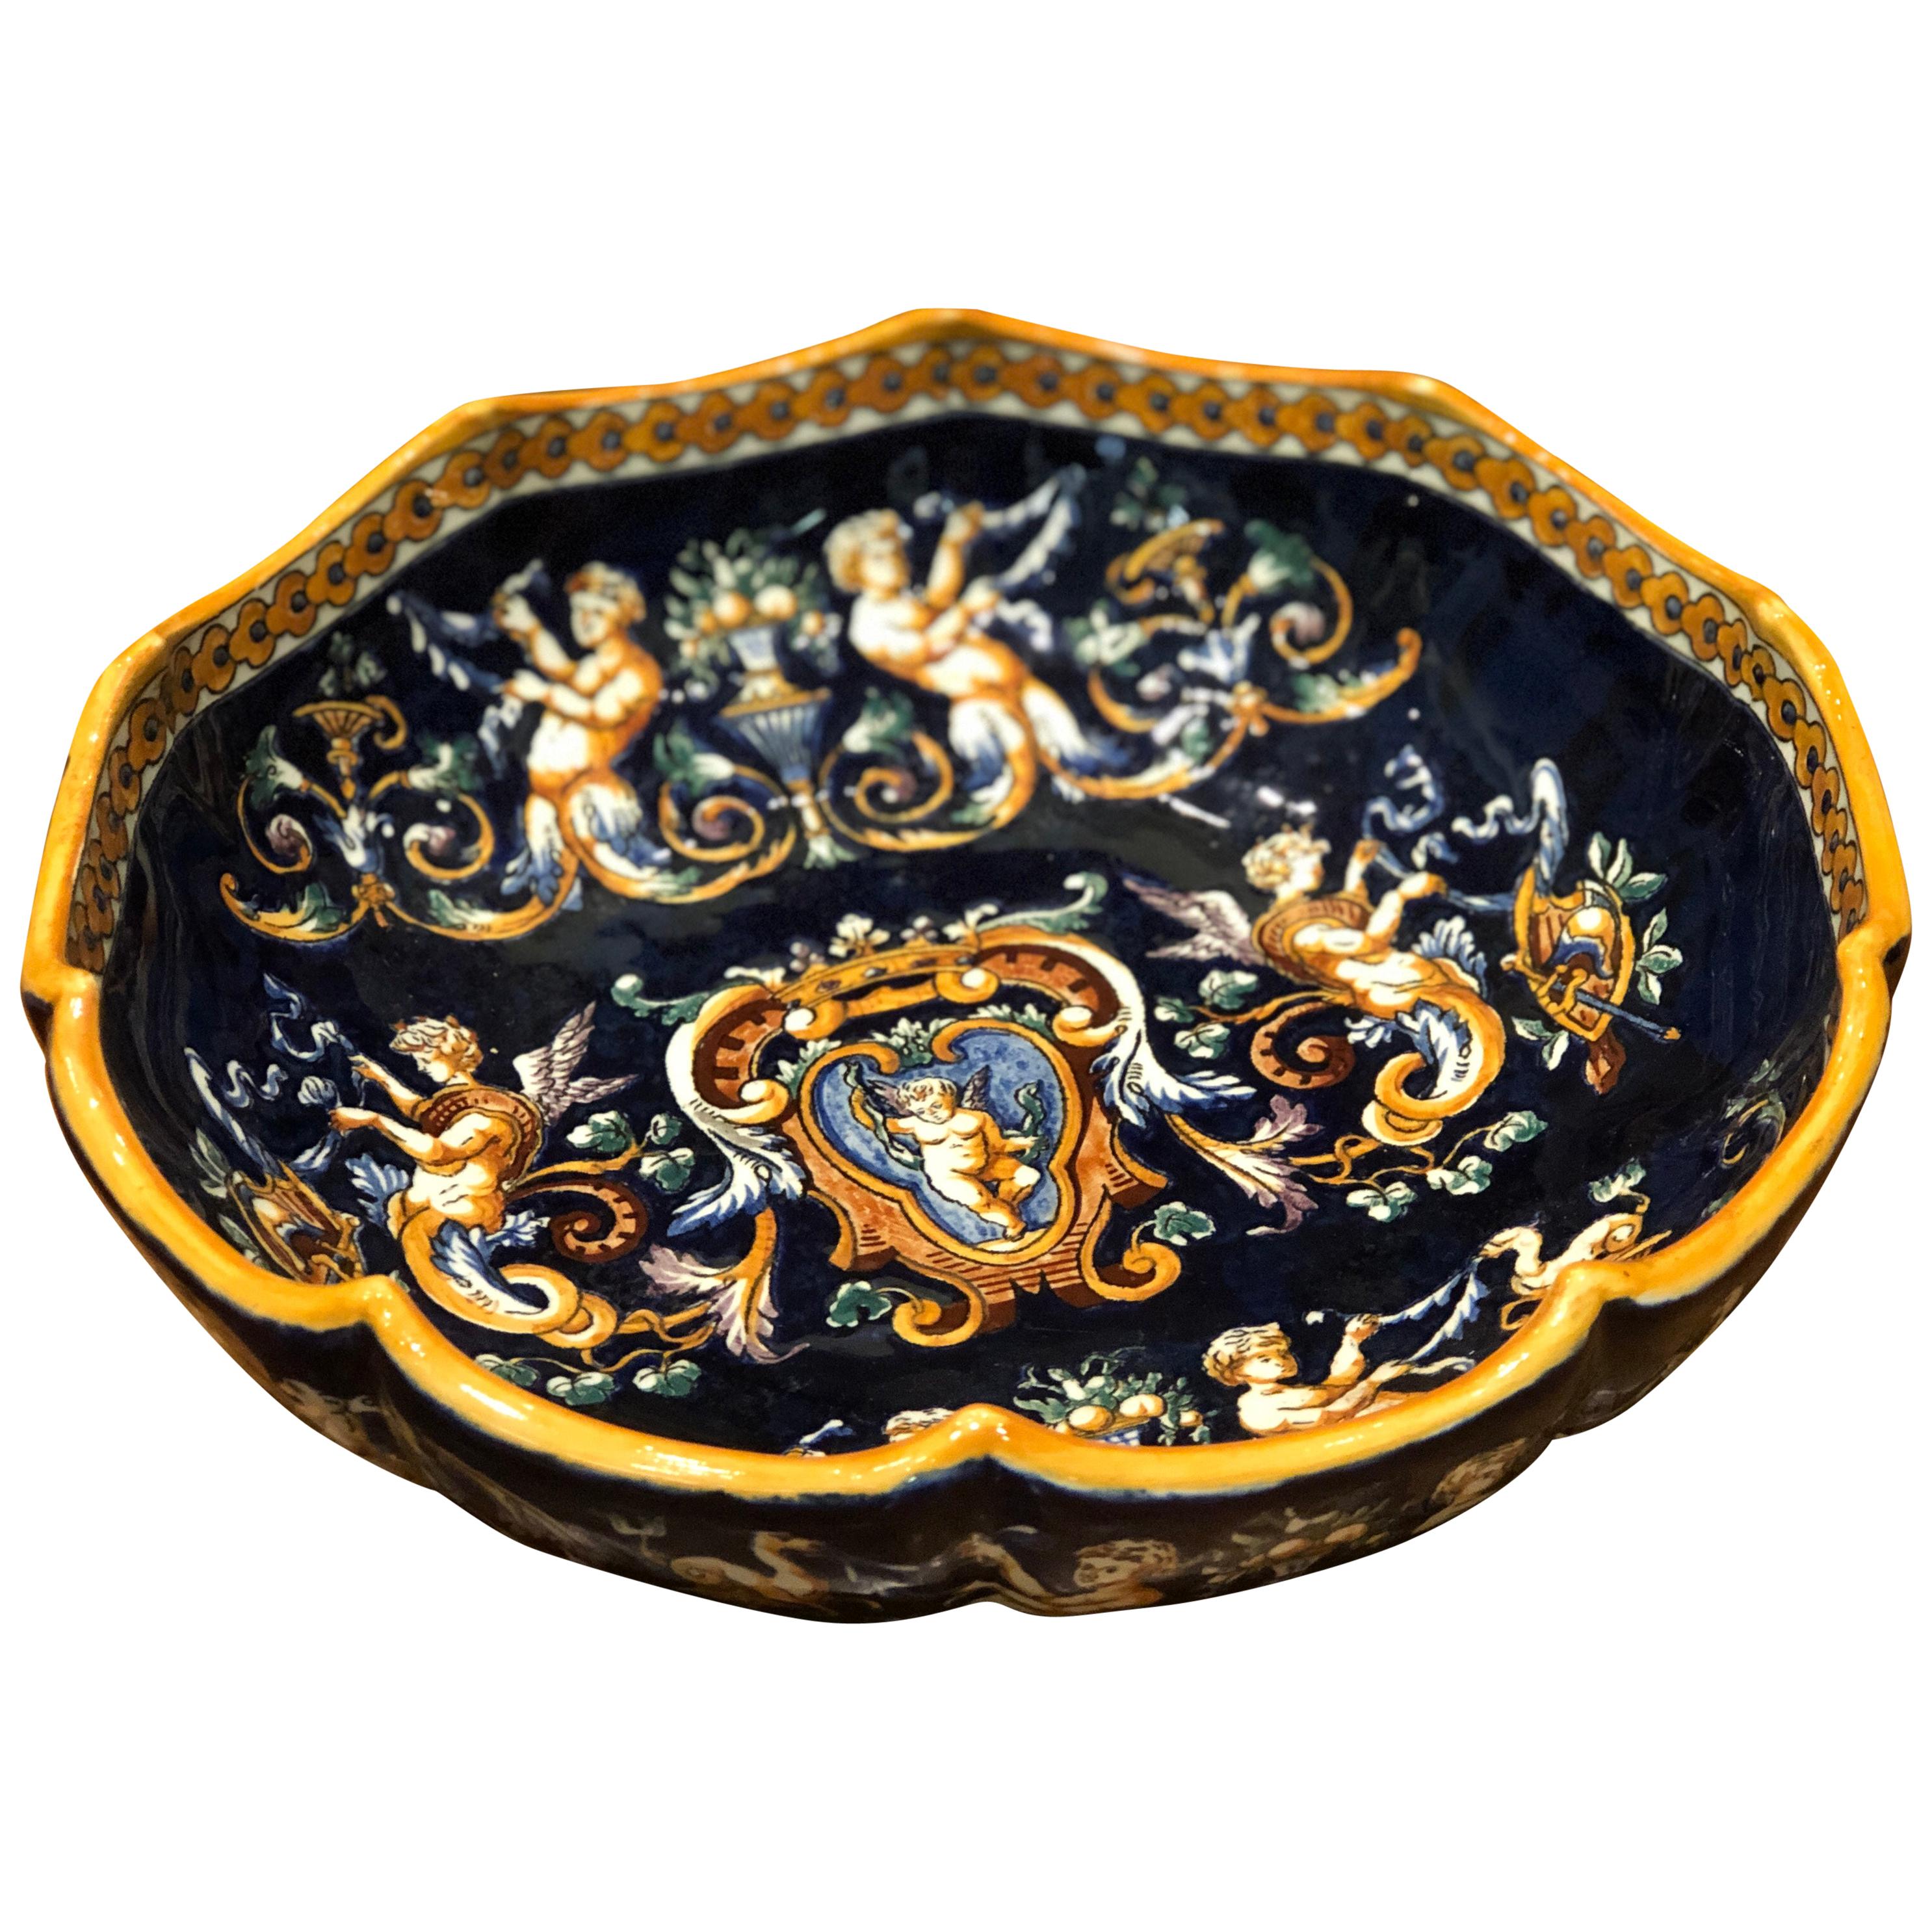 19th Century French Gien Renaissance Ceramic Bowl or Decorative Dish